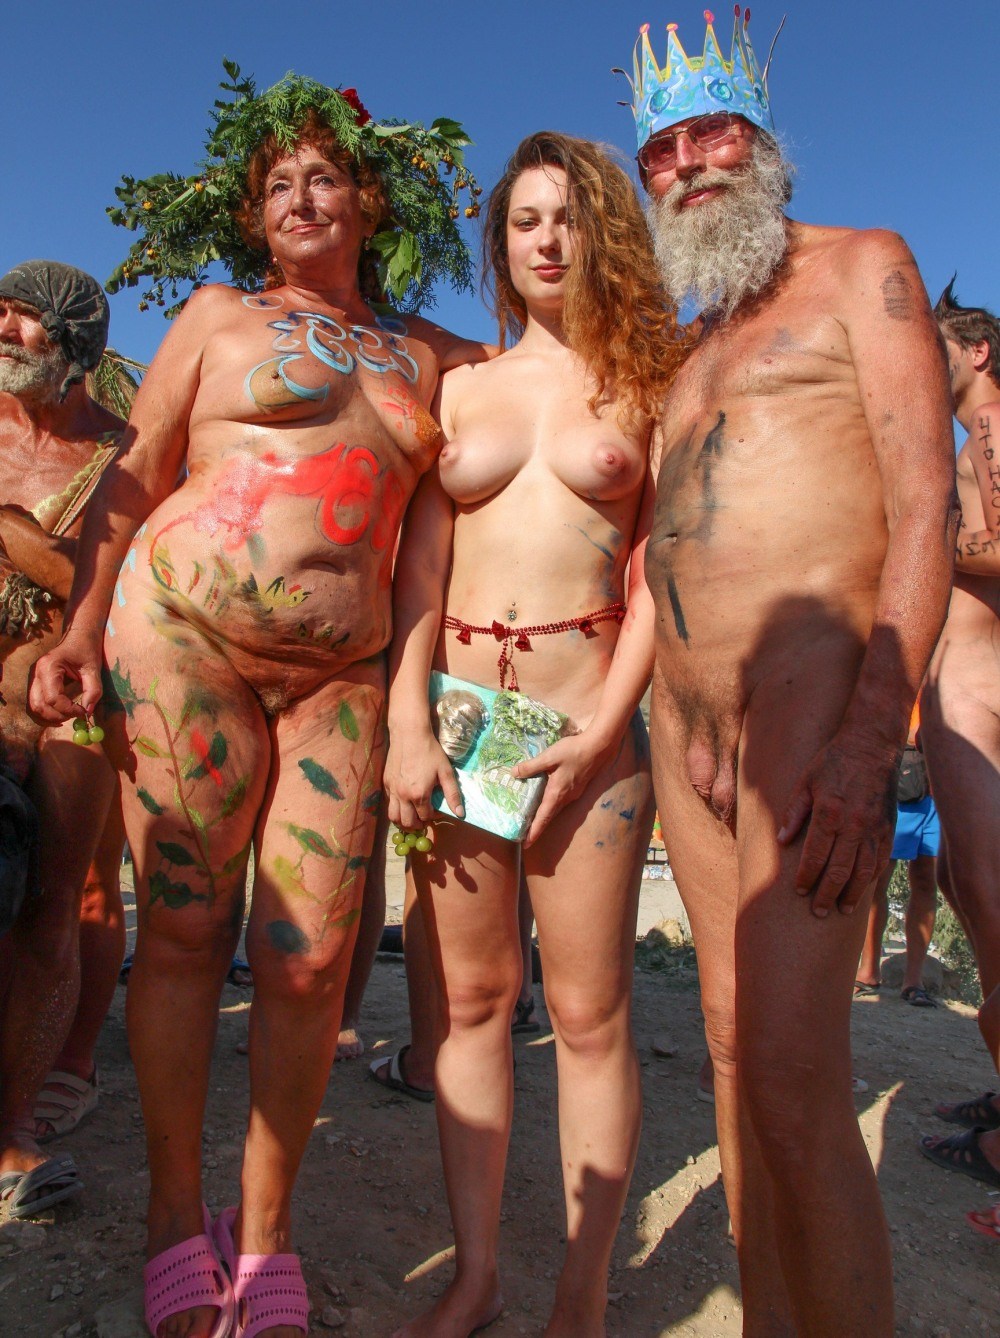 https://motherlesspics.com/uploads/posts/2022-11/1668673327_1-motherlesspics-com-p-erotika-sliv-festival-nudistov-1.jpg